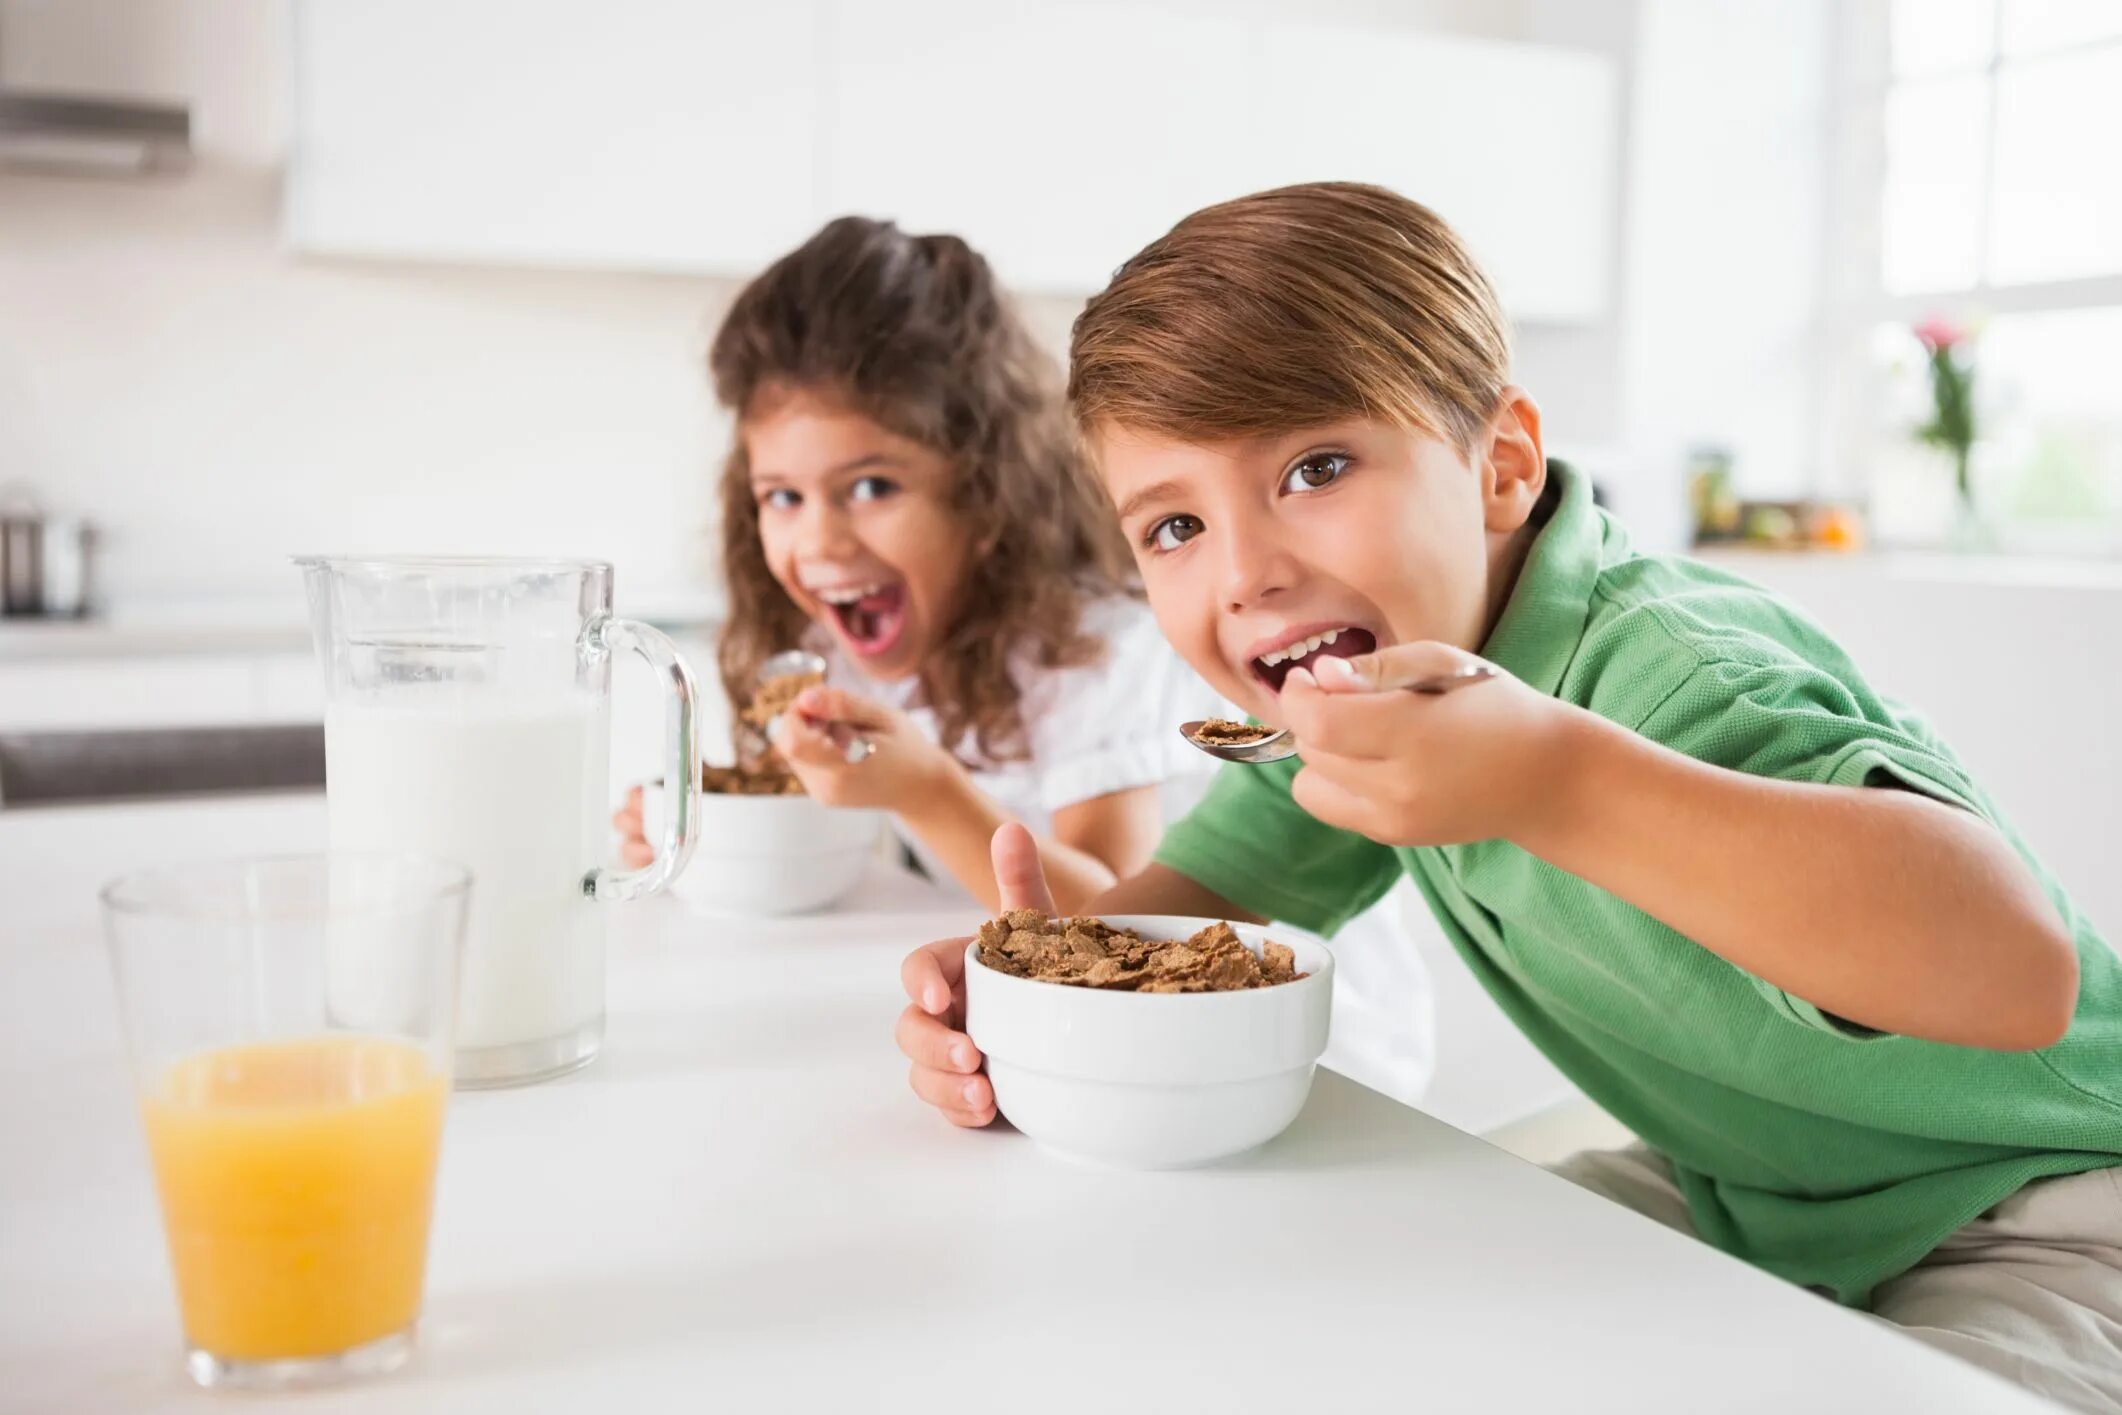 Should your child. Завтракает. Завтрак школьника. Ребенок завтракает. Здоровый завтрак для школьника.